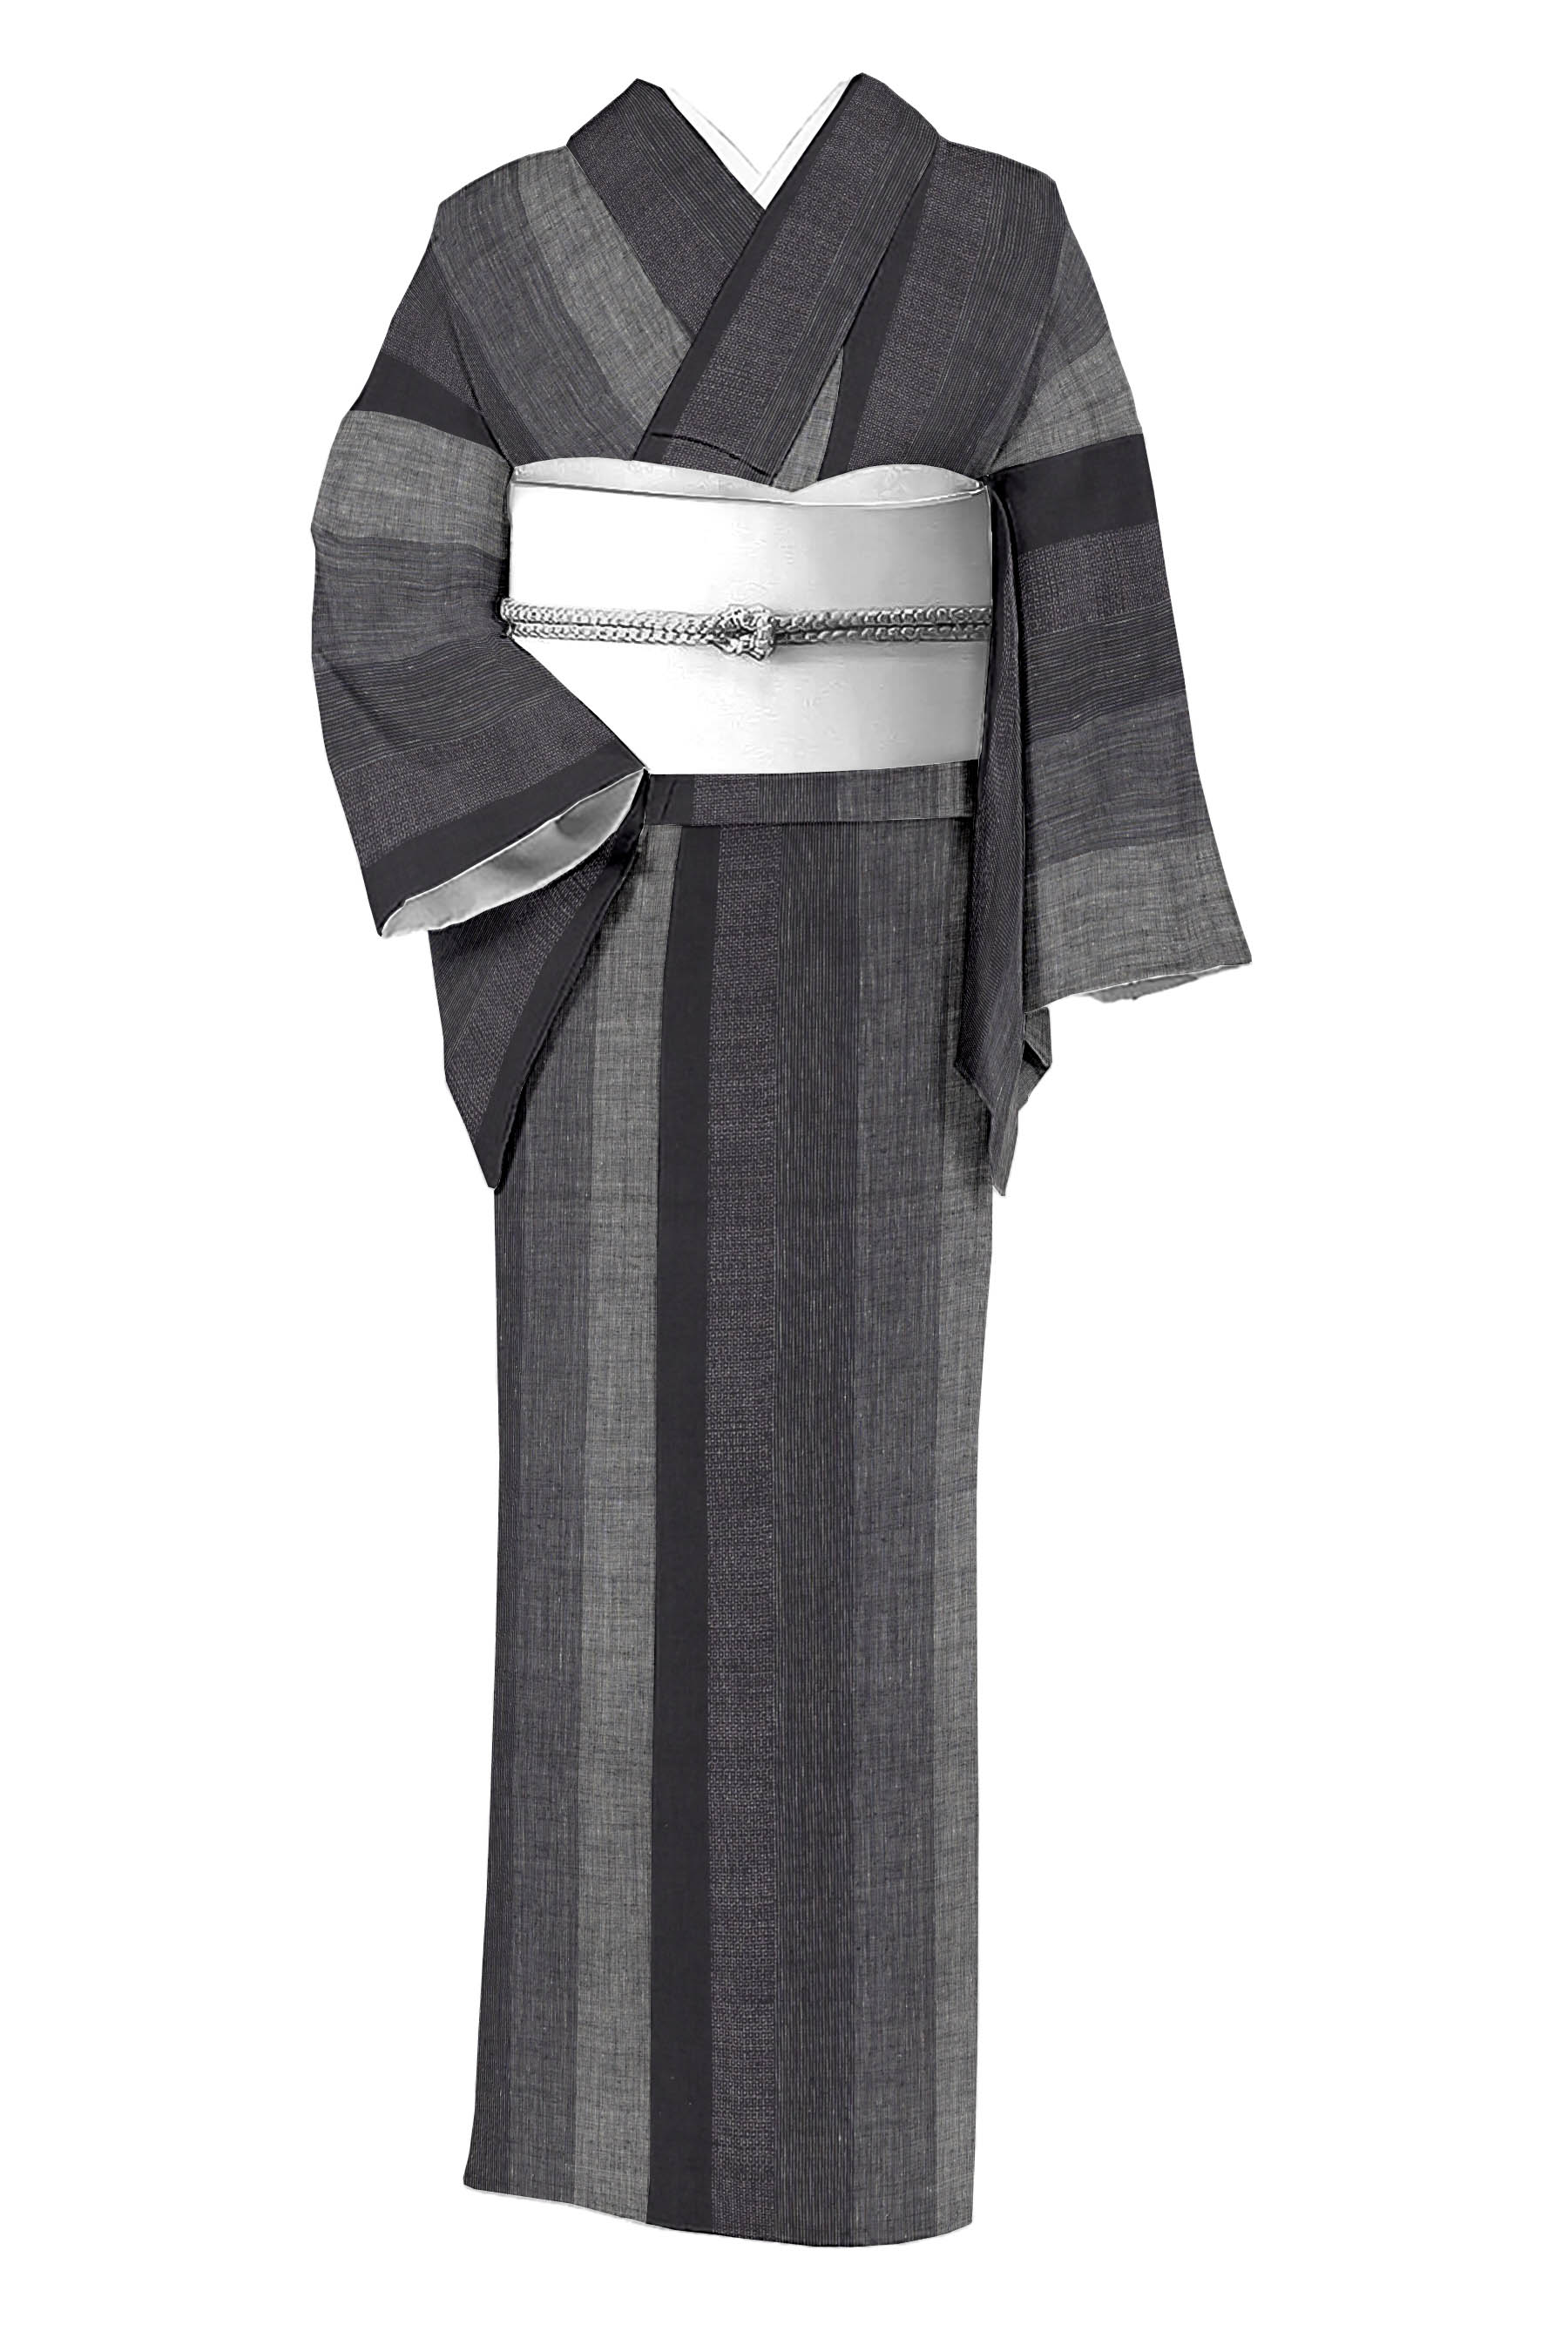 hakuの紬未使用 本場結城紬 袷 紬 着物 - 着物